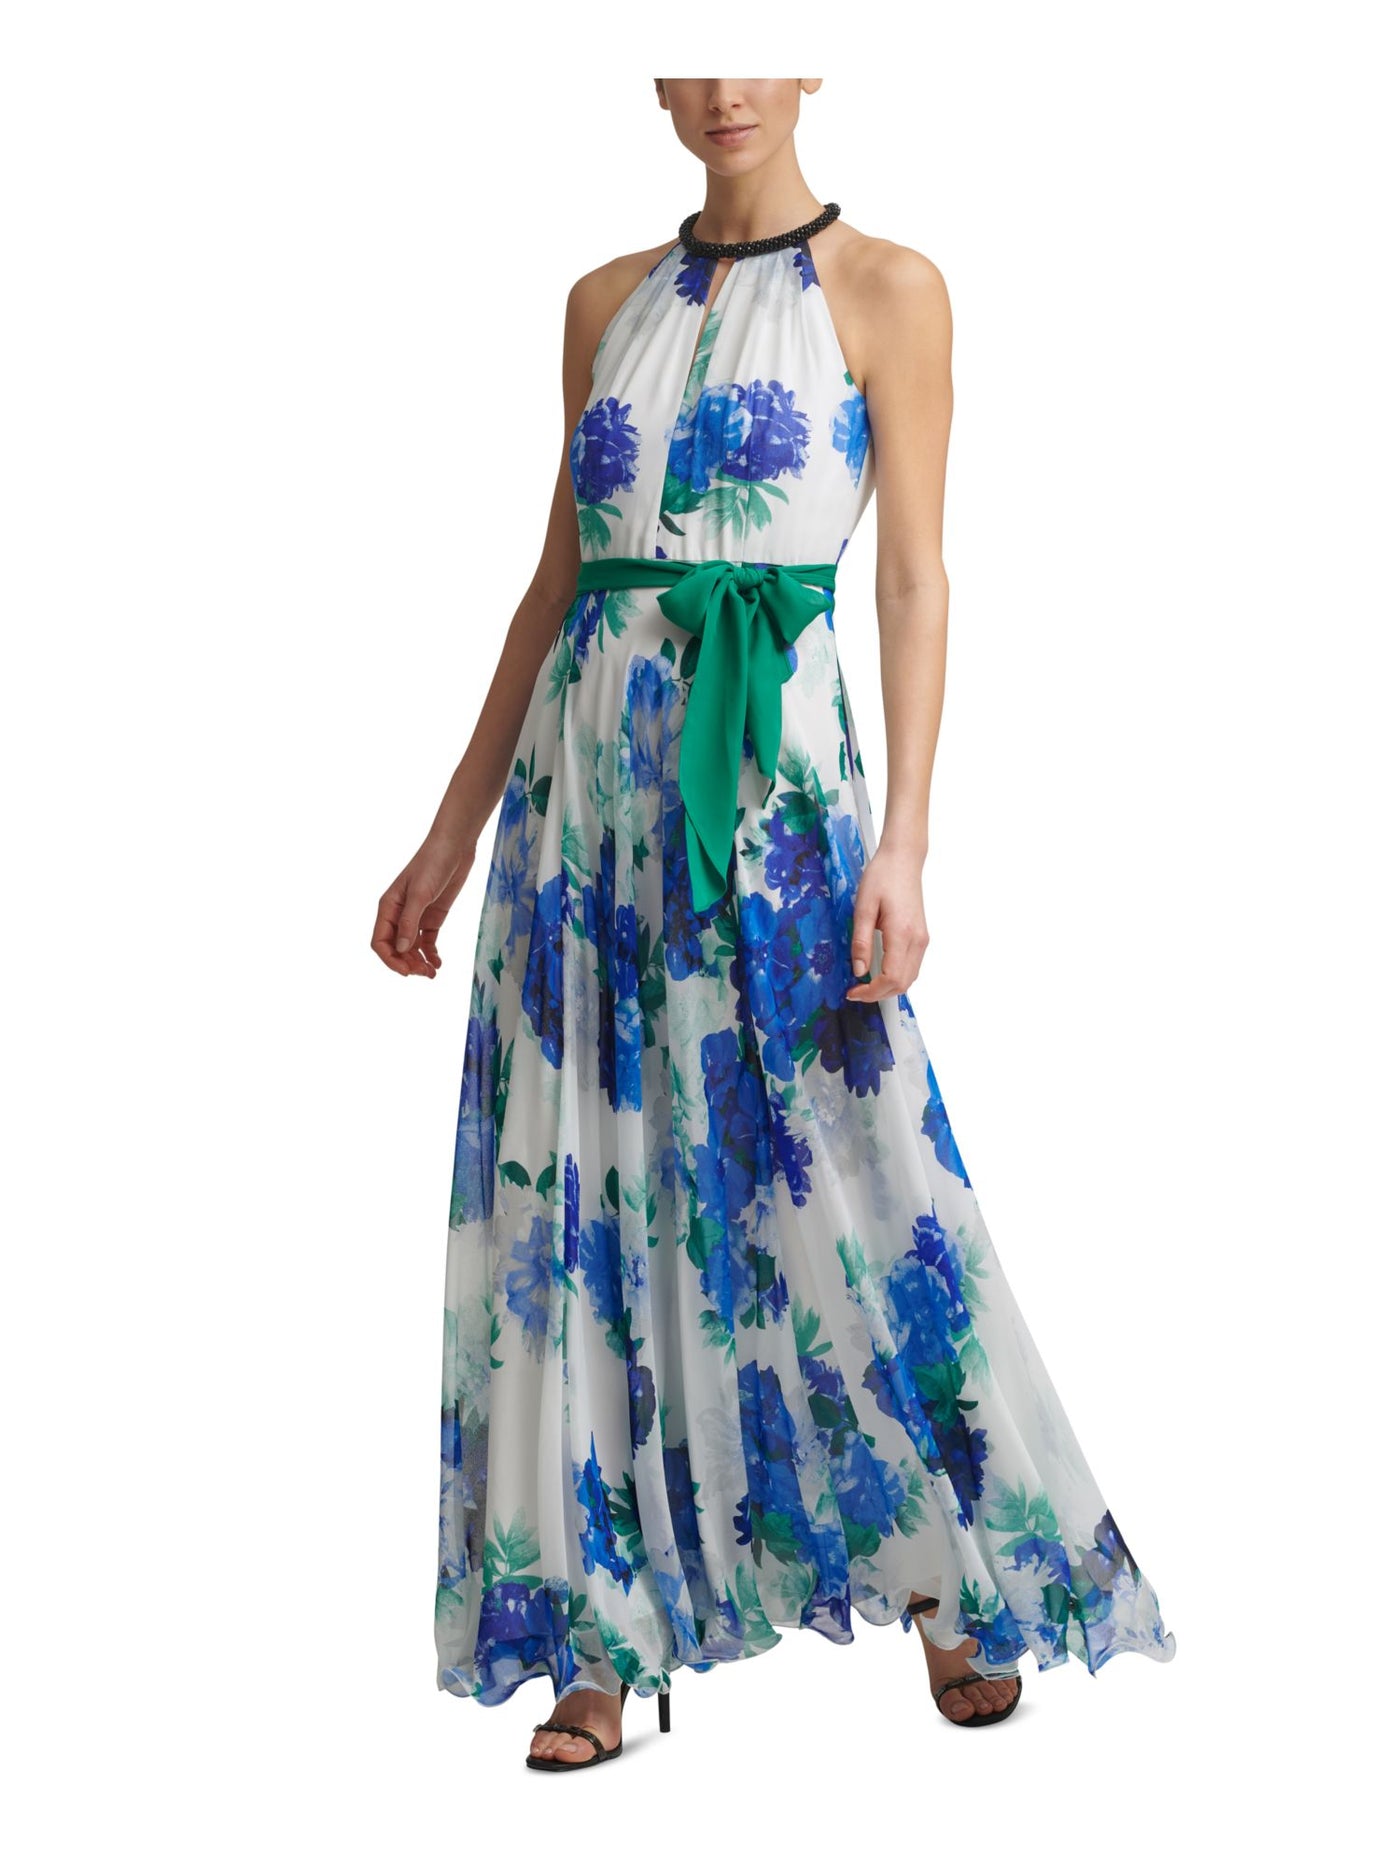 CALVIN KLEIN Womens Blue Embellished Zippered Belted Sheer Lined Floral Sleeveless Halter Full-Length Formal Gown Dress 2